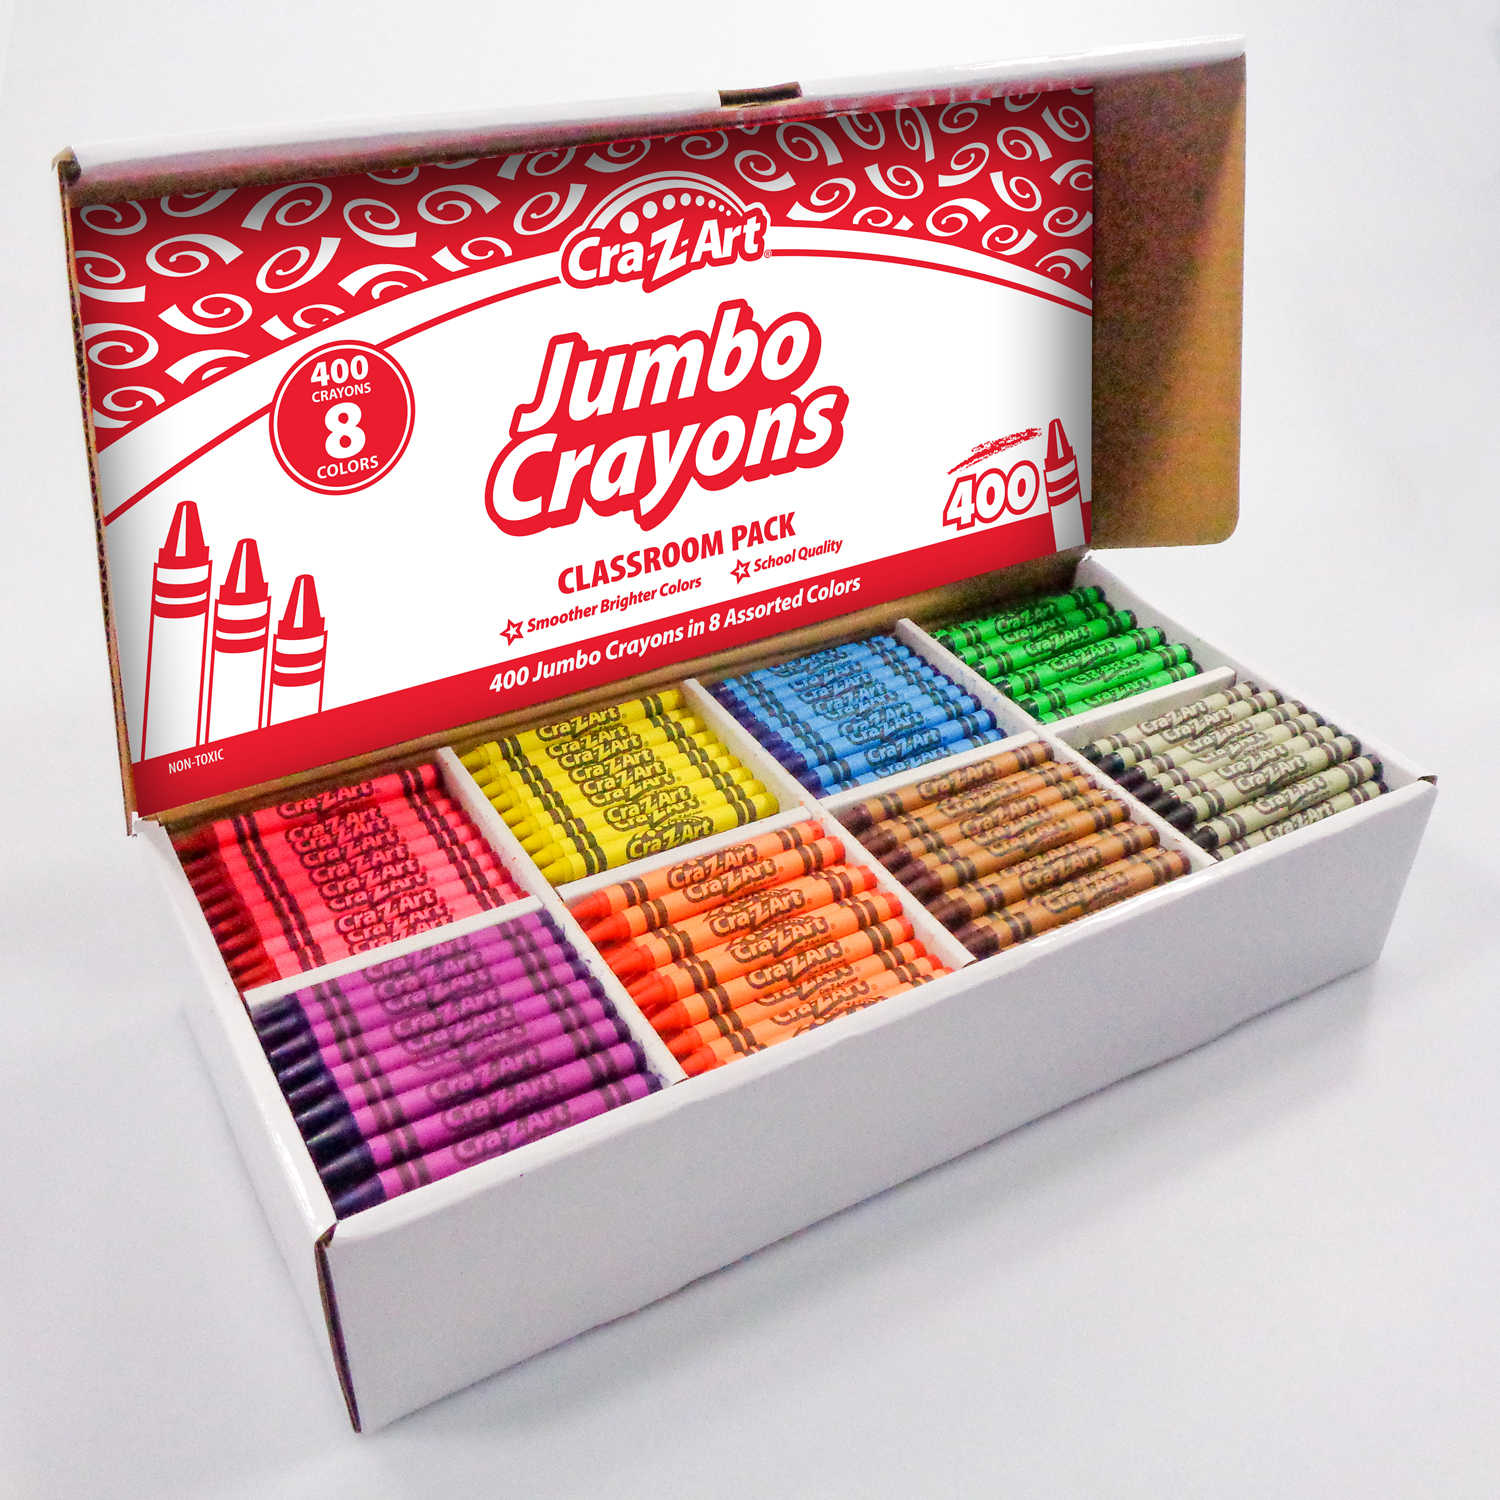 The Teachers' Lounge®  Jumbo Crayon Classroom Pack, 8 Color, Box of 400